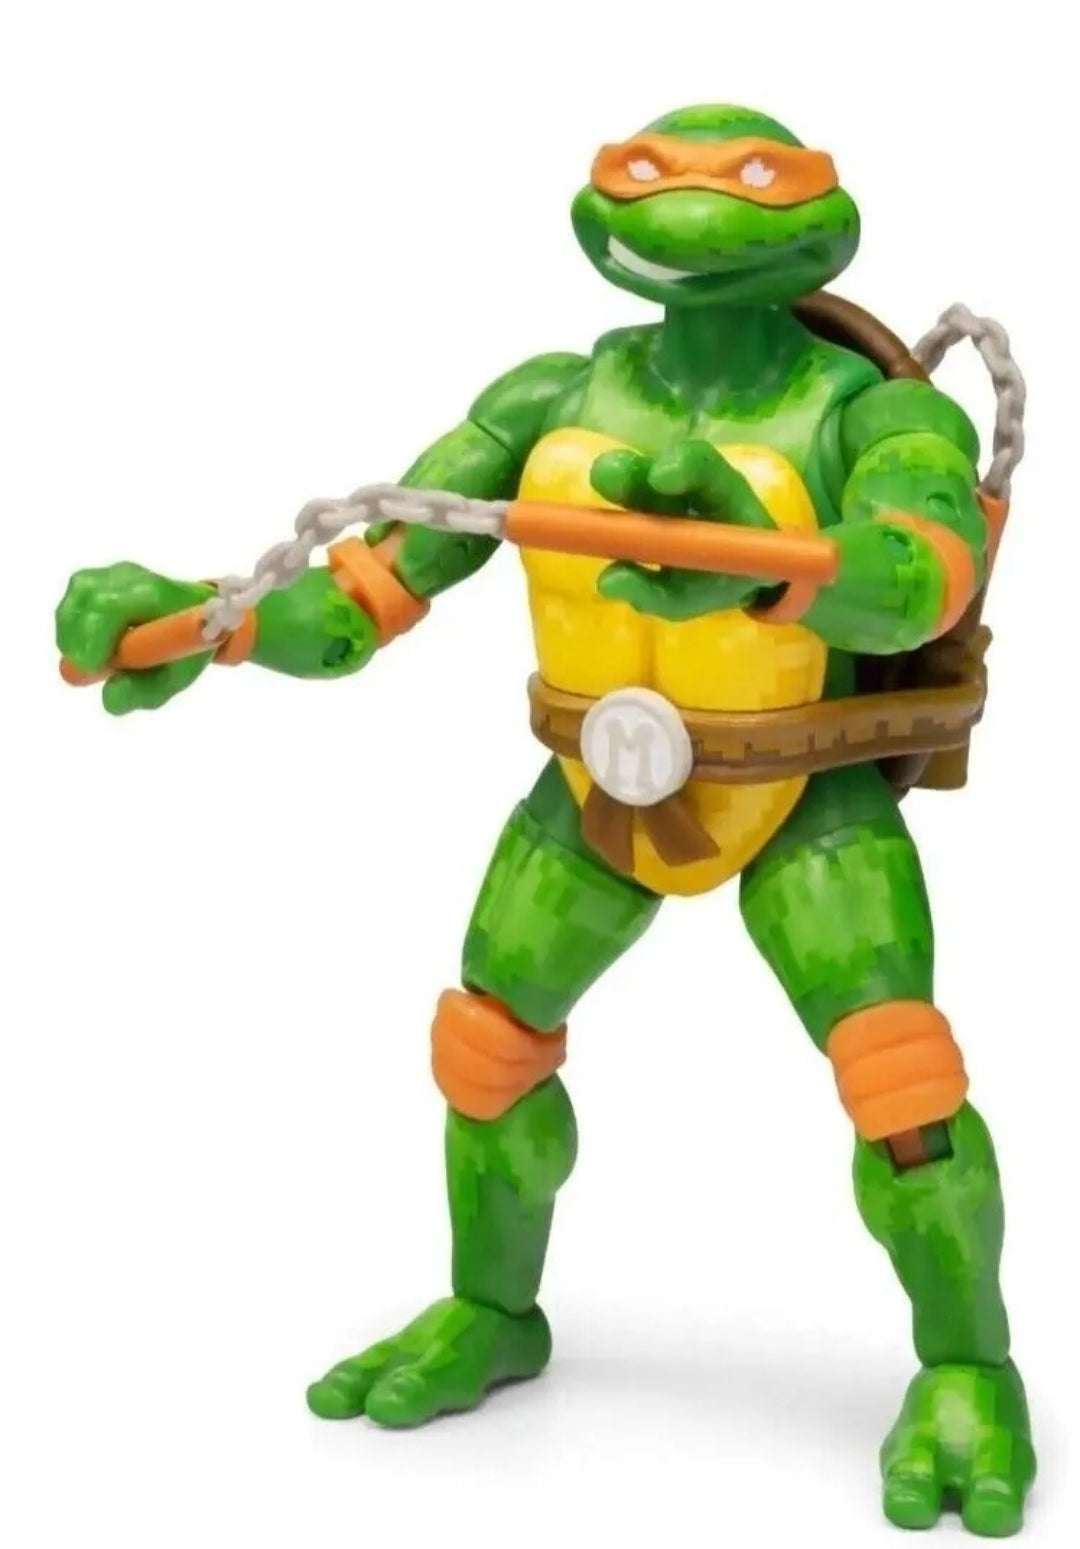 BST AXN TMNT Teenage Mutant Ninja Turtles Mikey Michelangelo Arcade Game Figure